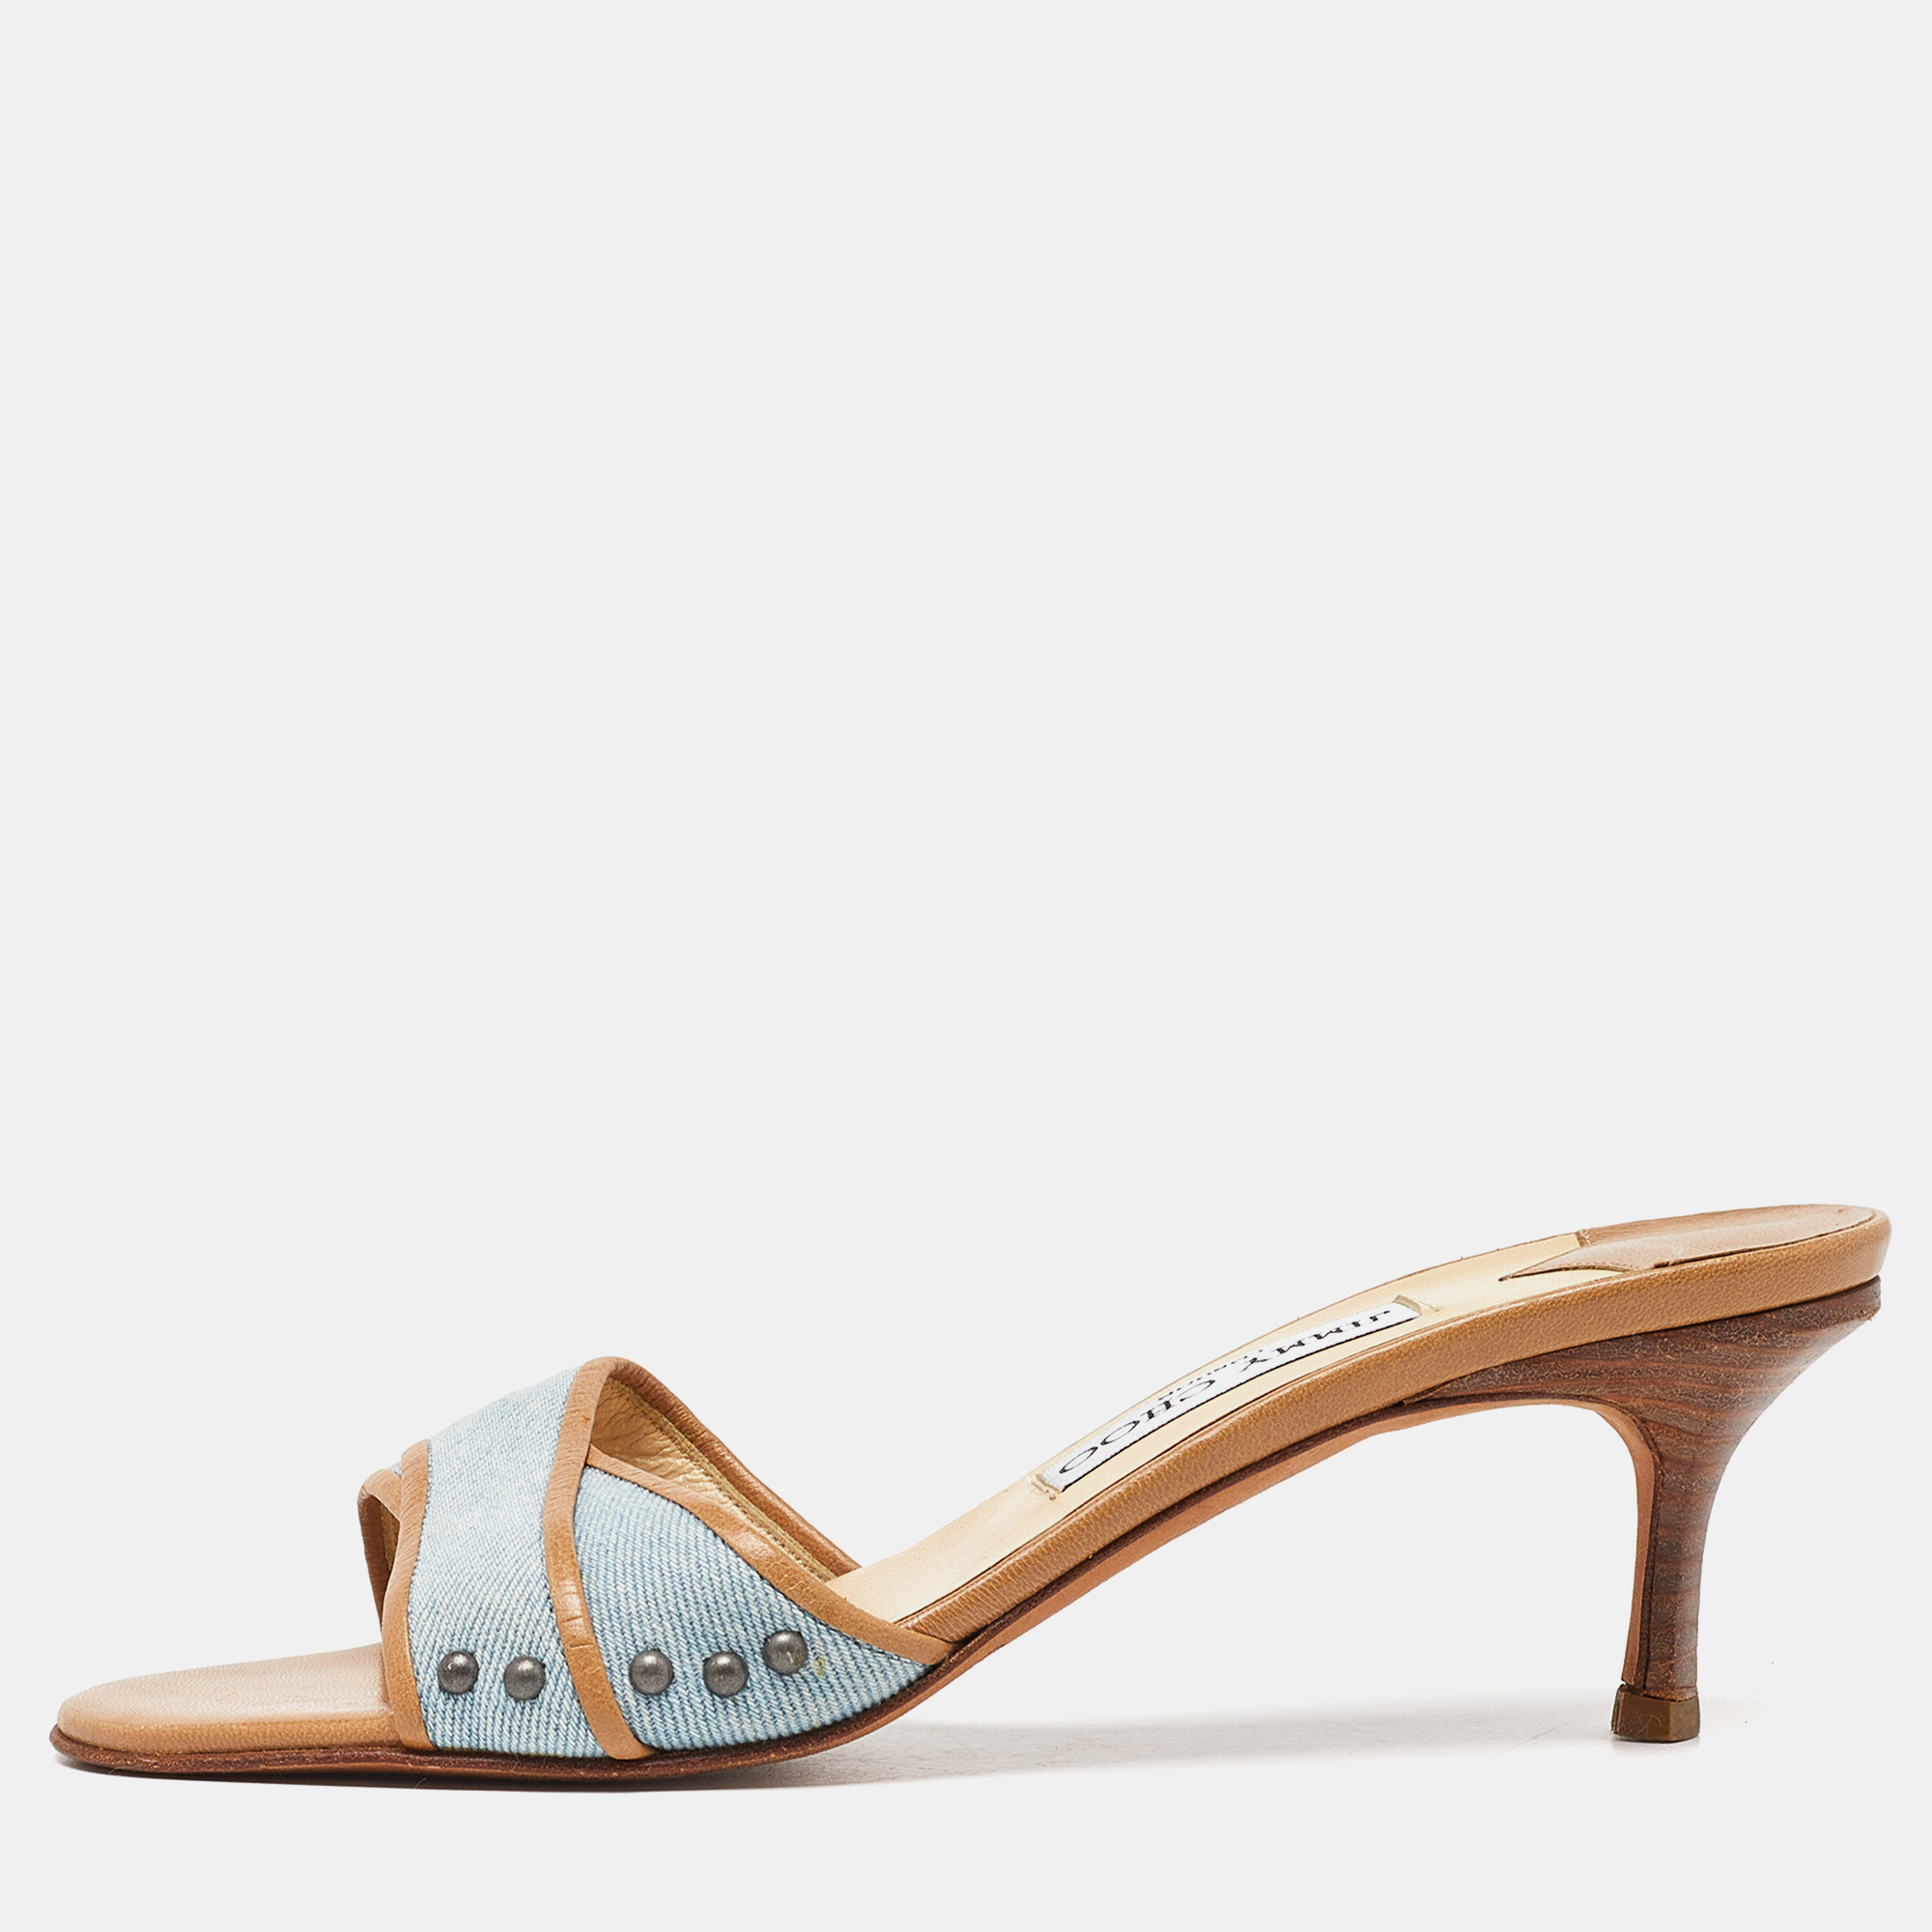 Jimmy choo navy blue/beige leather studded open toe slide sandals size 37.5